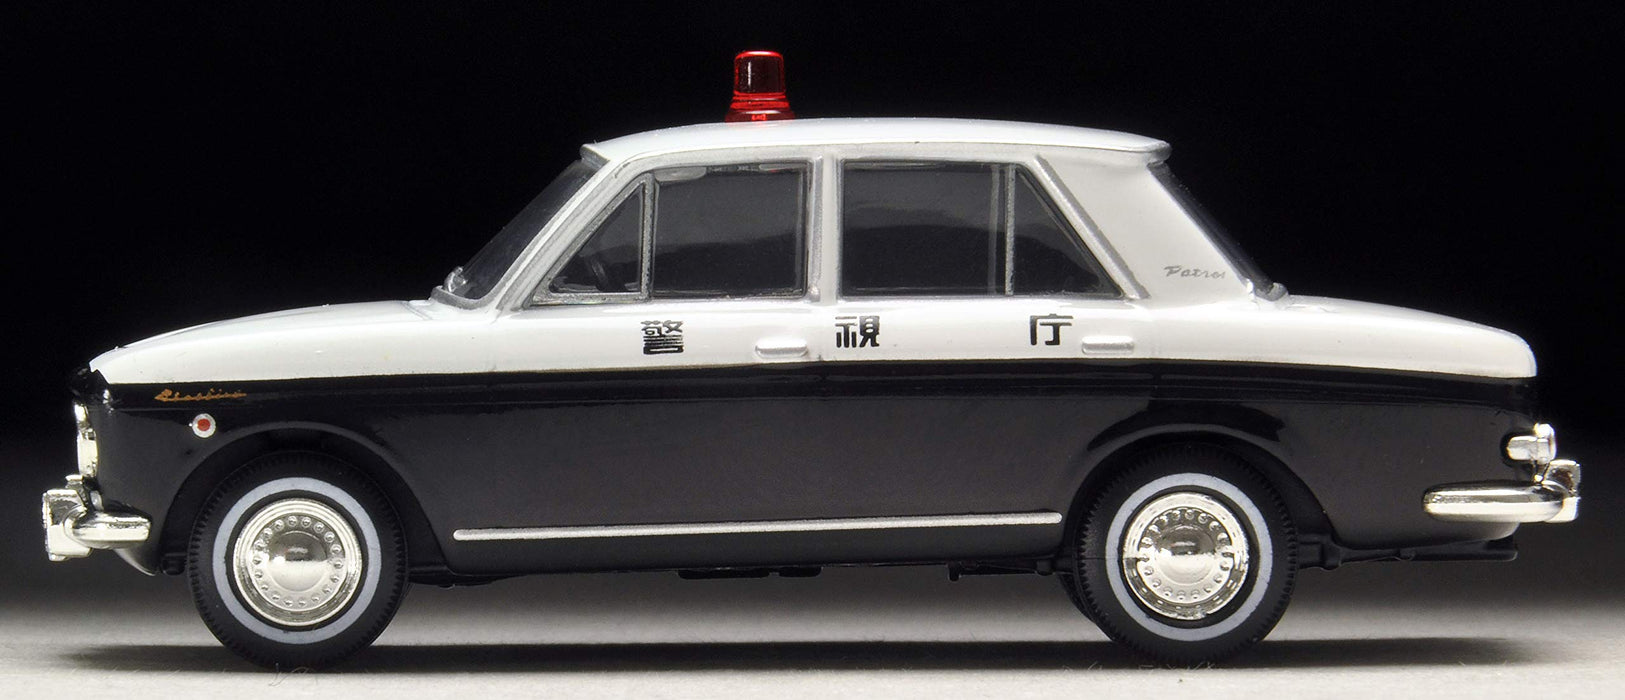 Tomytec Lv-183a Tomica Limited Vintage Datsun Bluebird Police Patrol Car 1/64 Police Car Toys